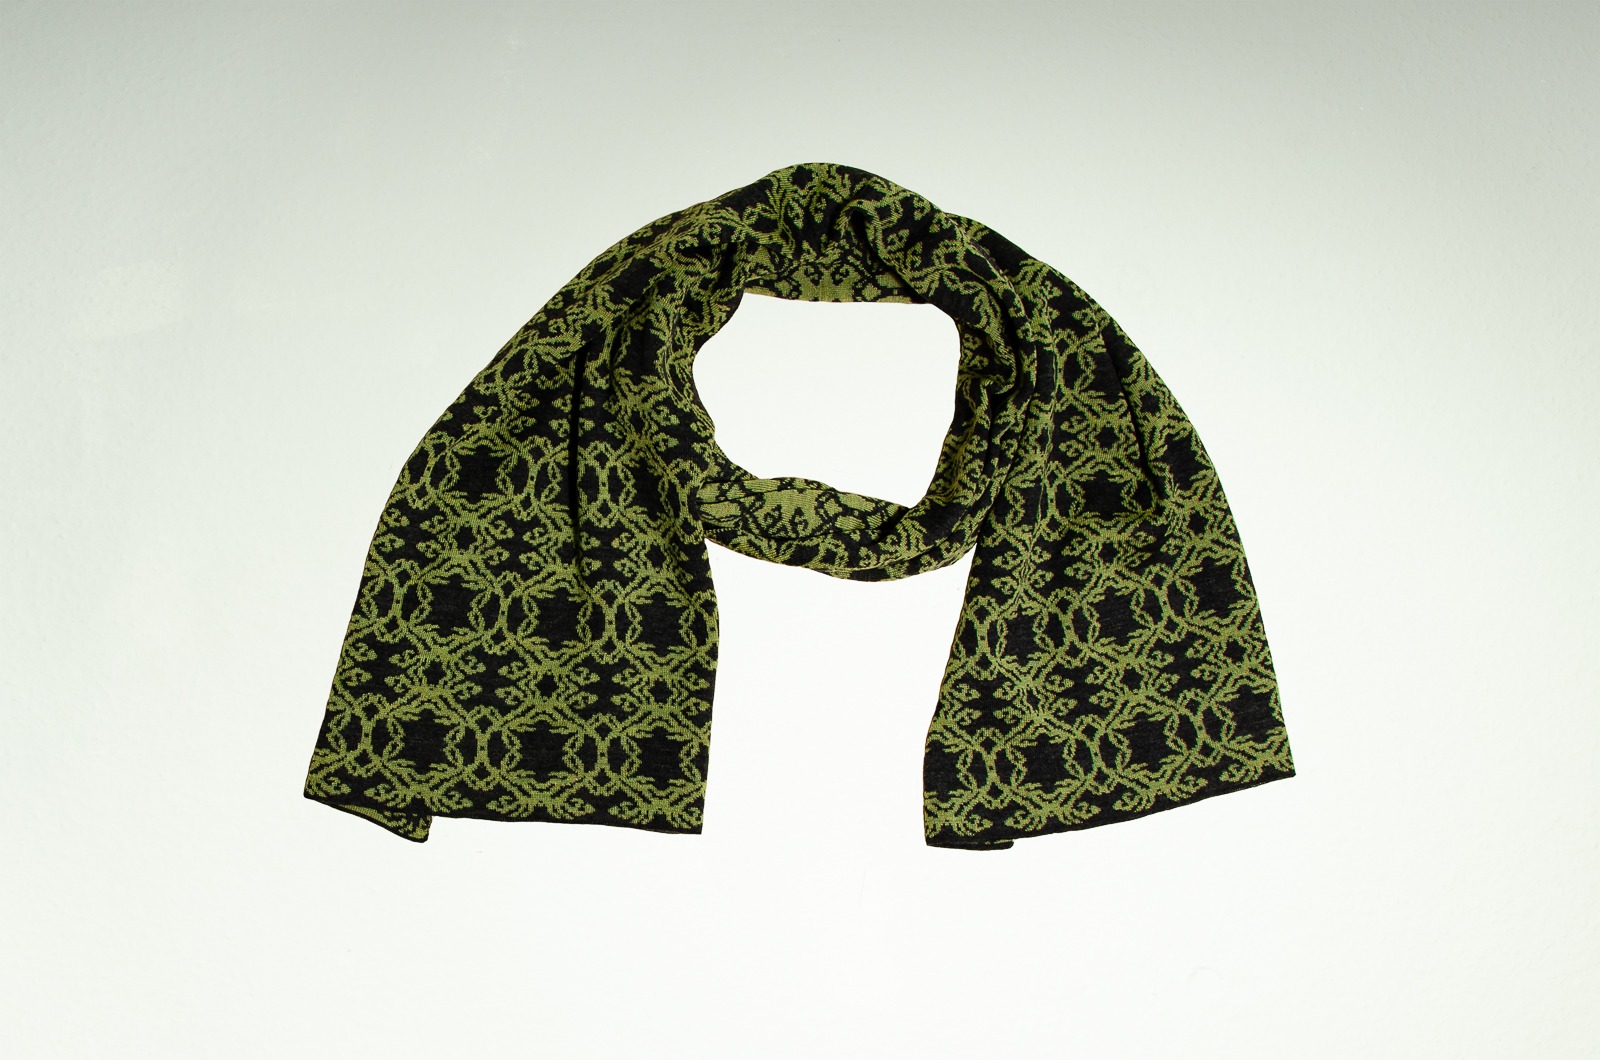 Merino scarf wreath in dark gray and light green 4